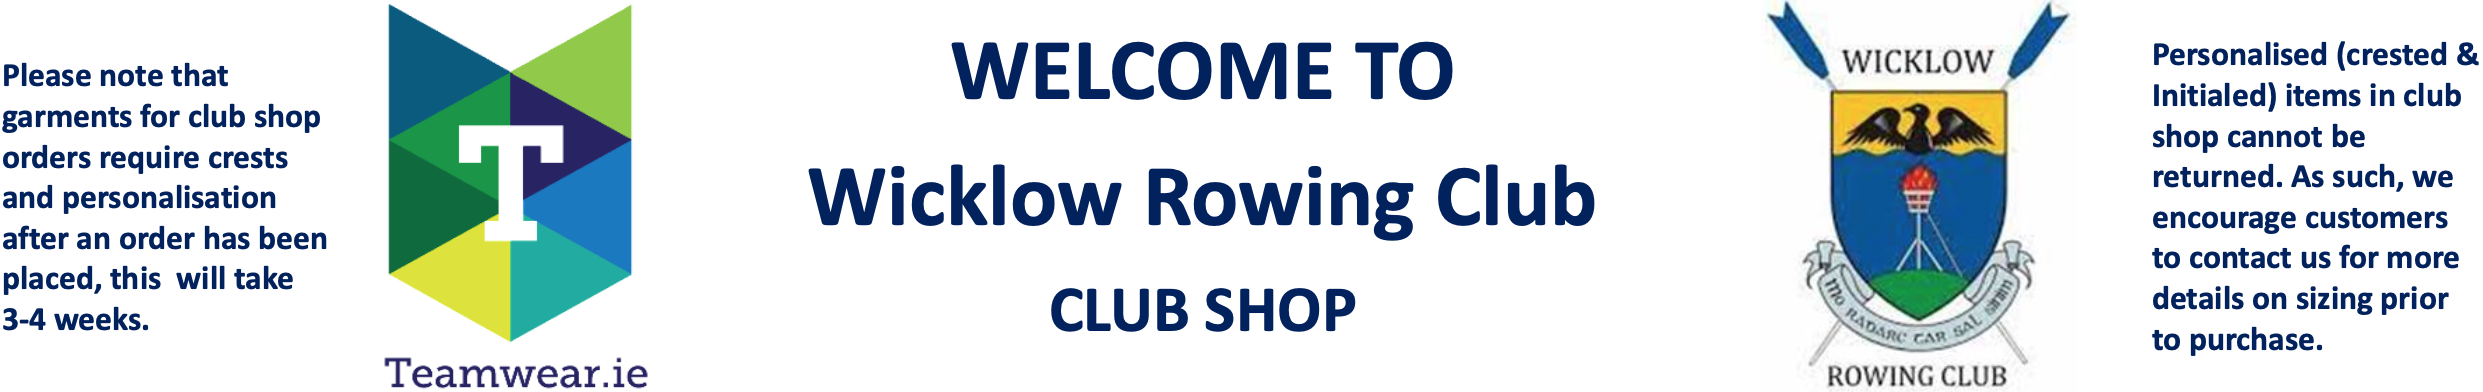 Wicklow Rowing Club